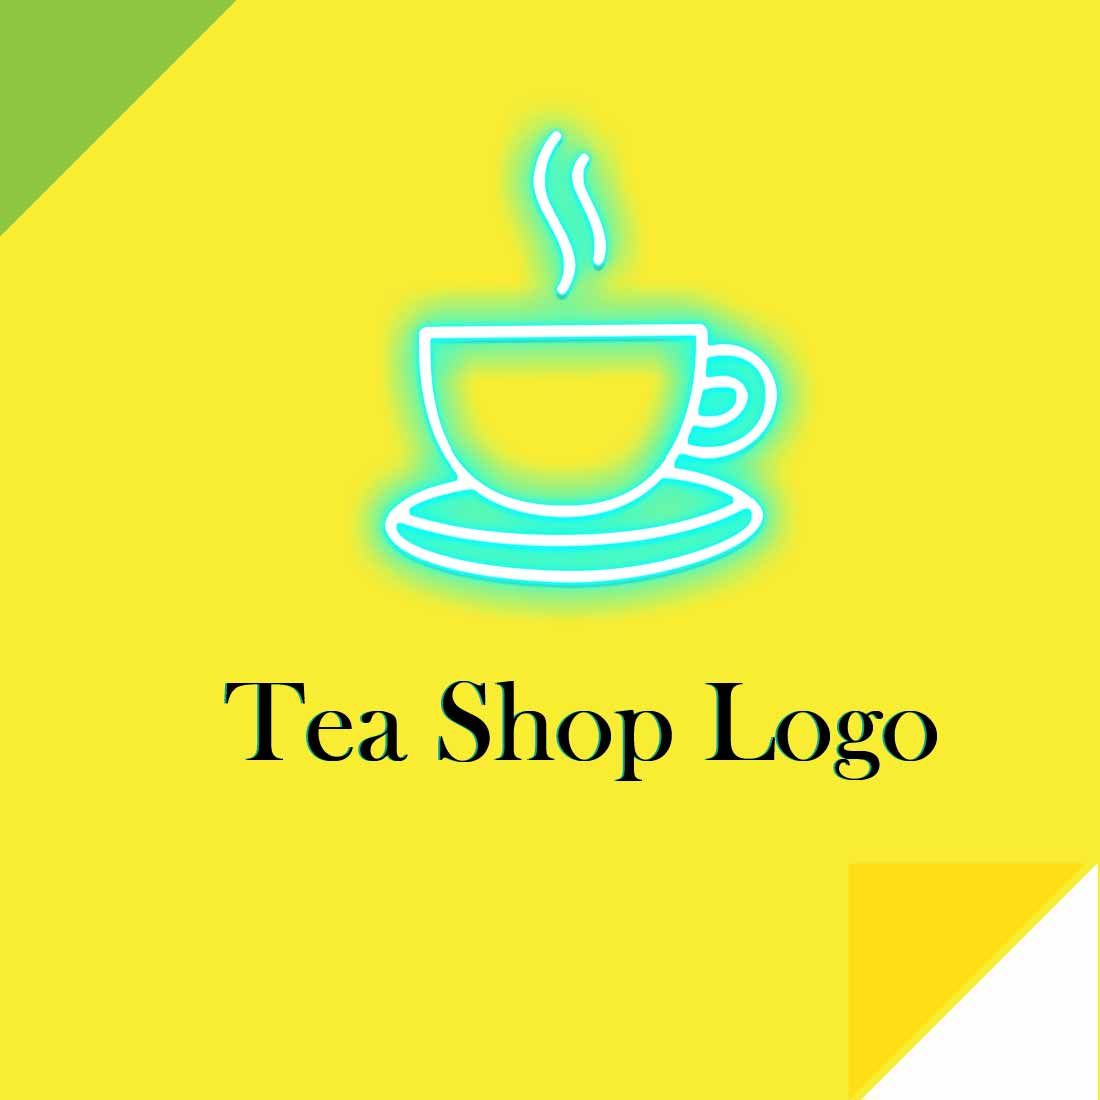 Attractive NEON light Tea Cup Logo Design cover image.